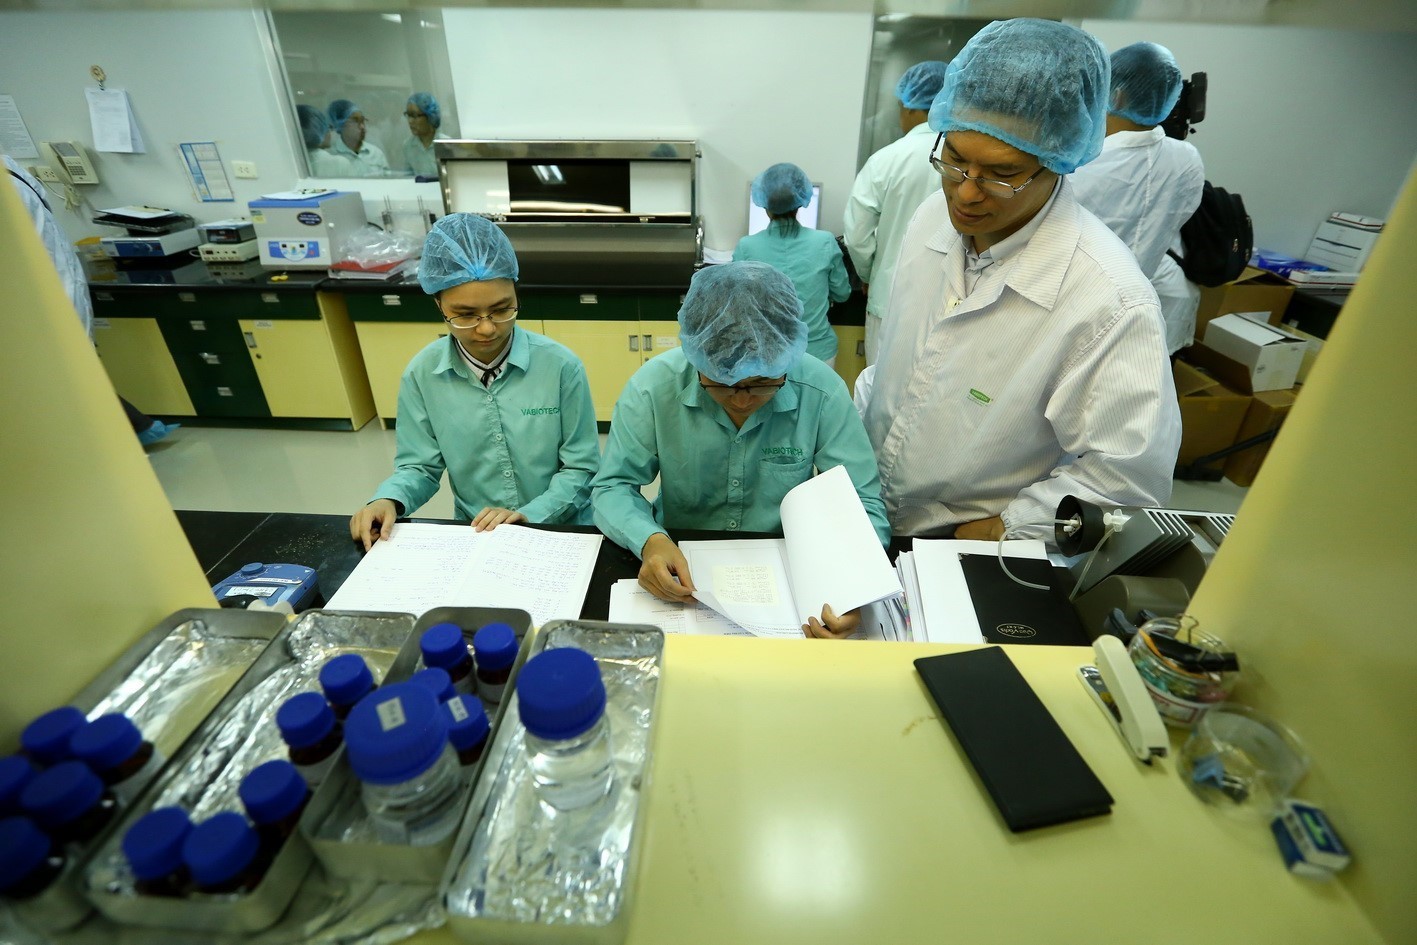 Vietnam hard at work developing COVID-19 vaccines – Mega Story